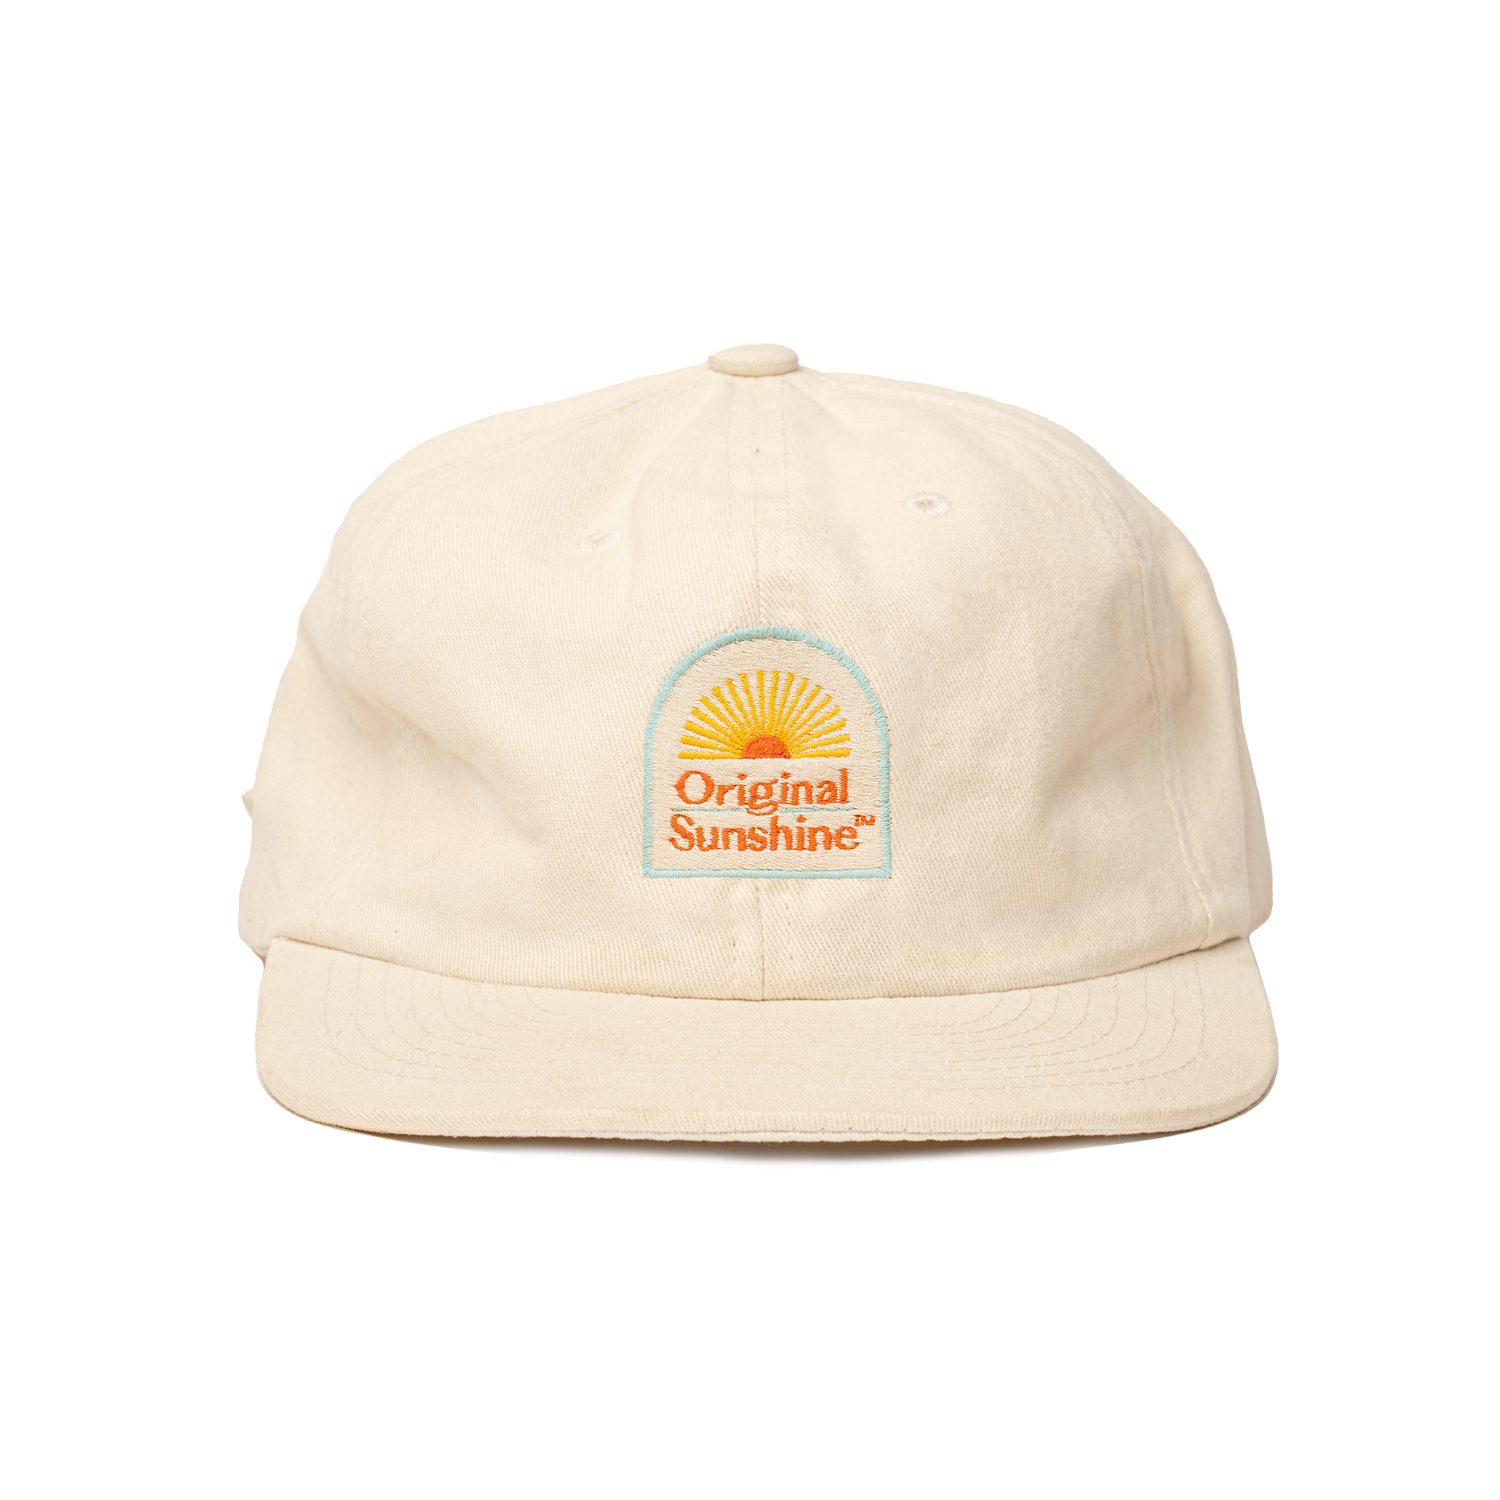 Original Sunshine Vintage White Cap — Original Sunshine